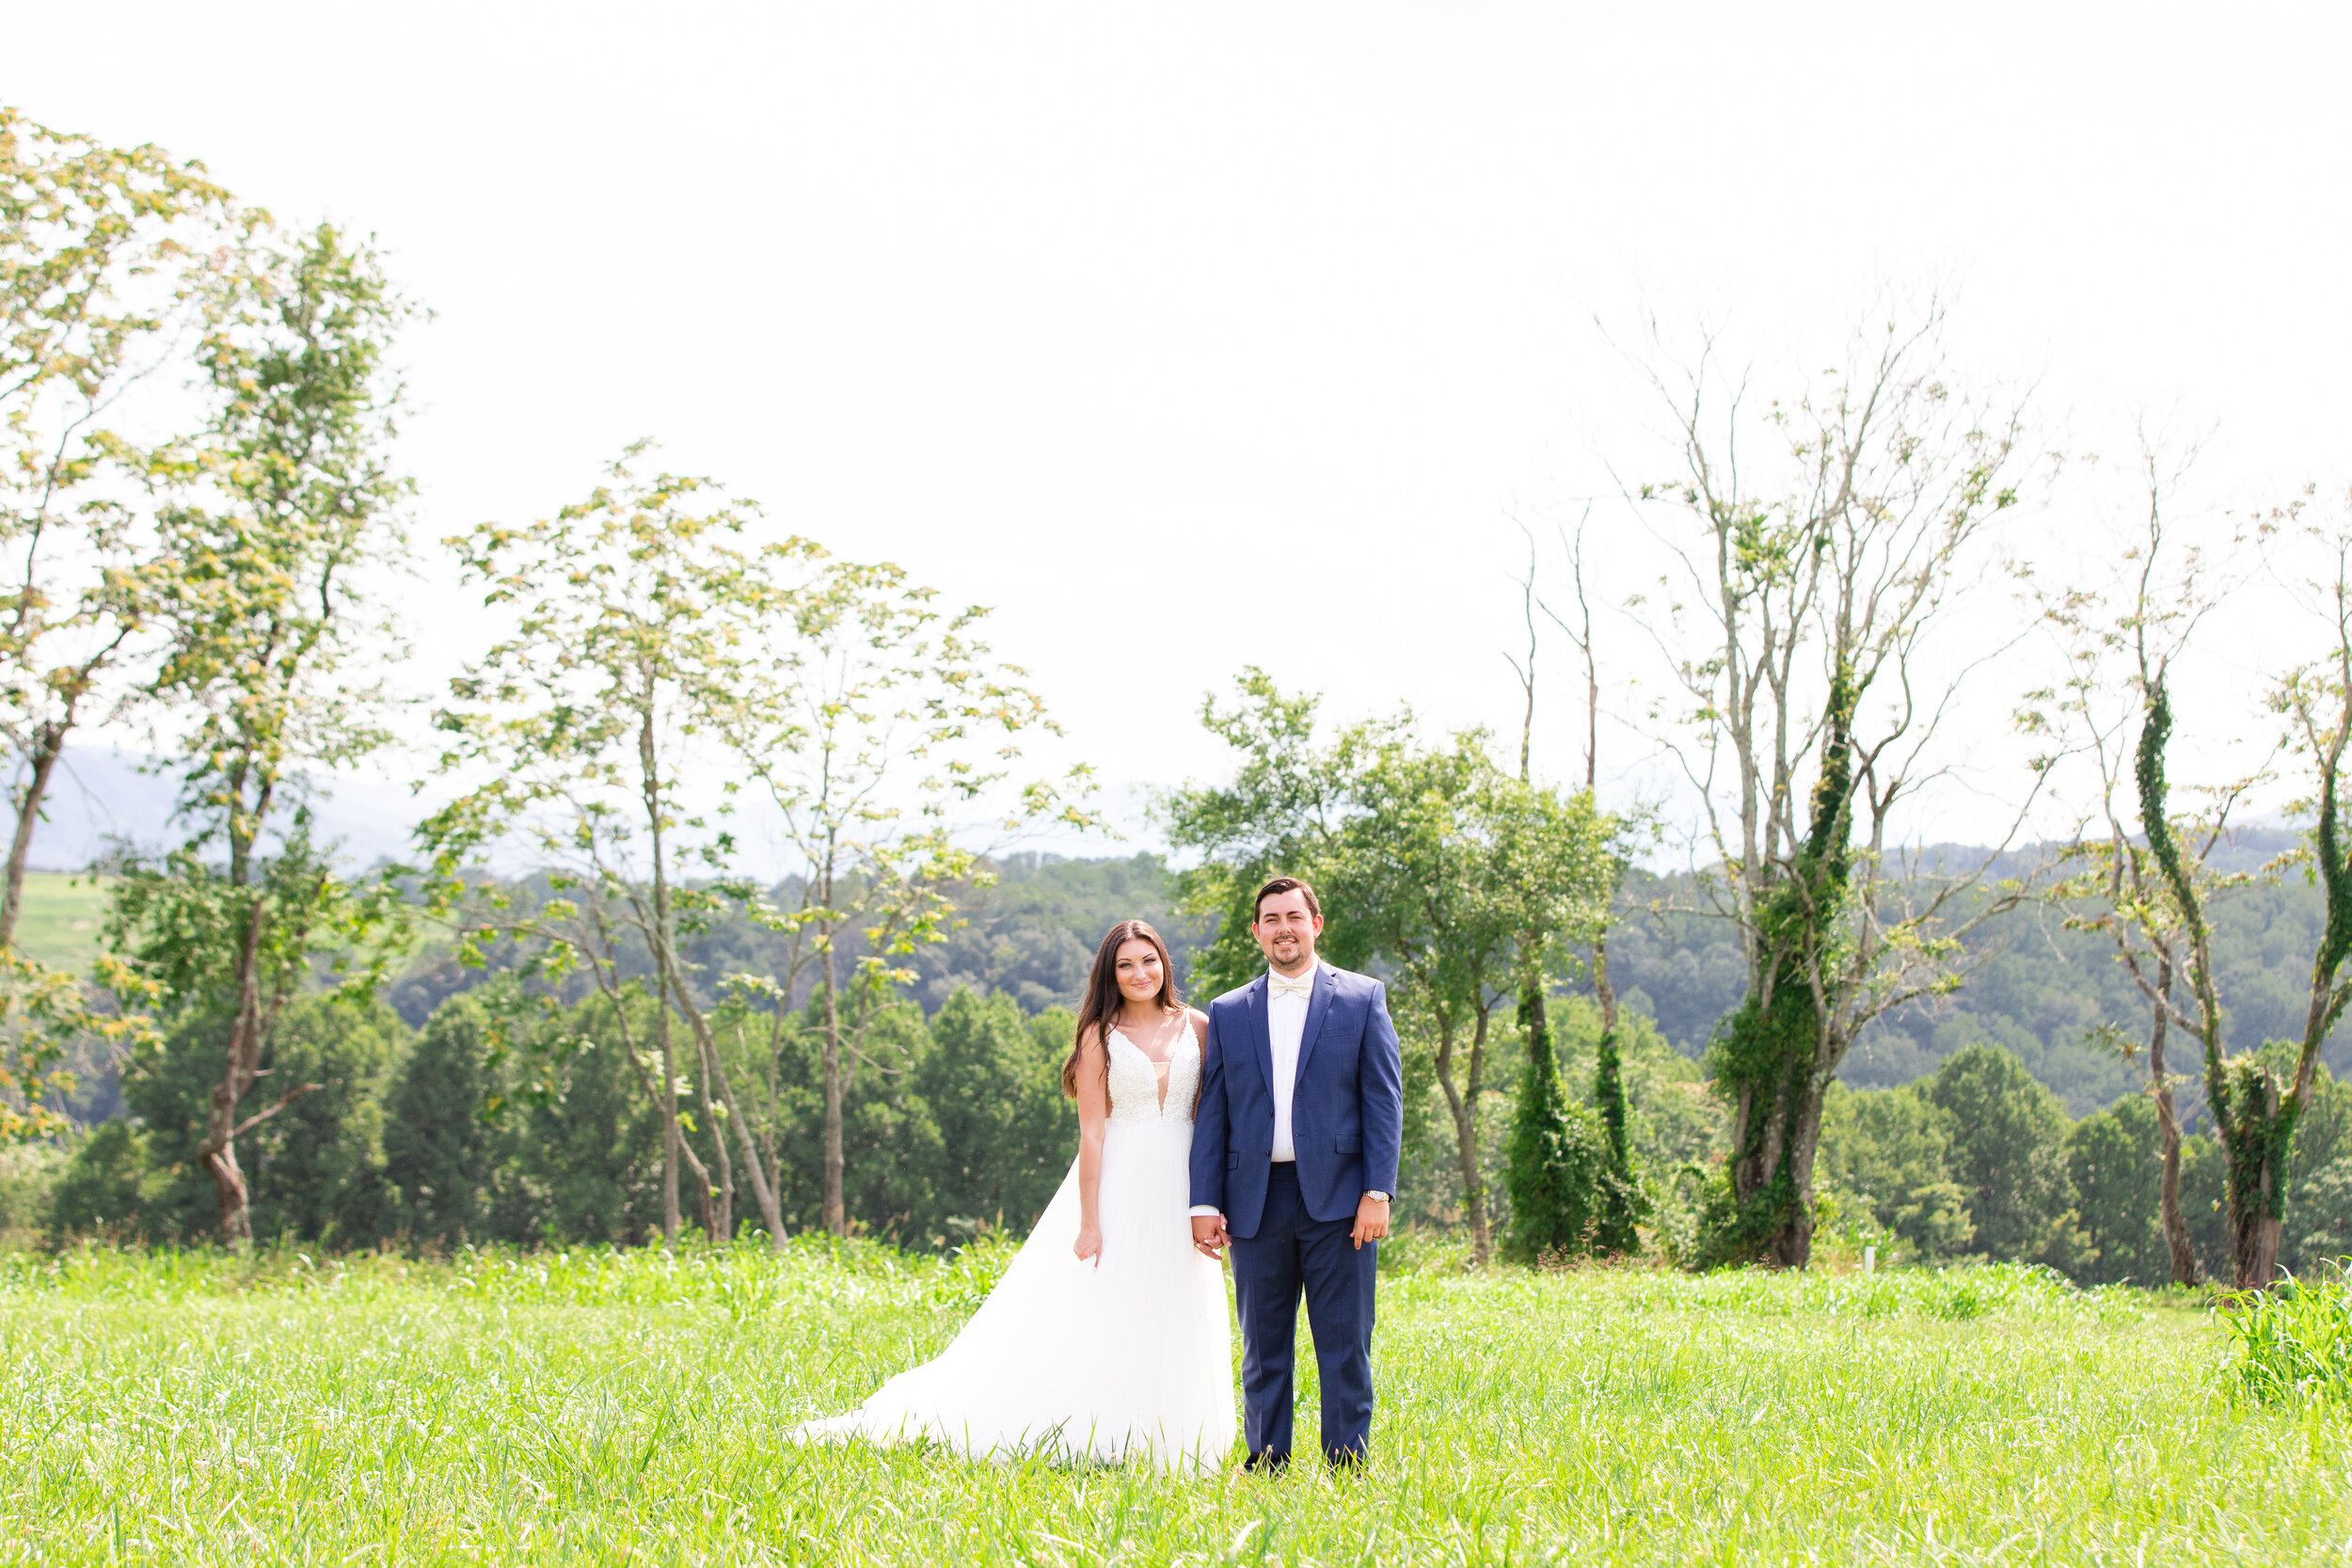 My Favorite Virginia Wedding Venues | Virginia Wedding Photographer